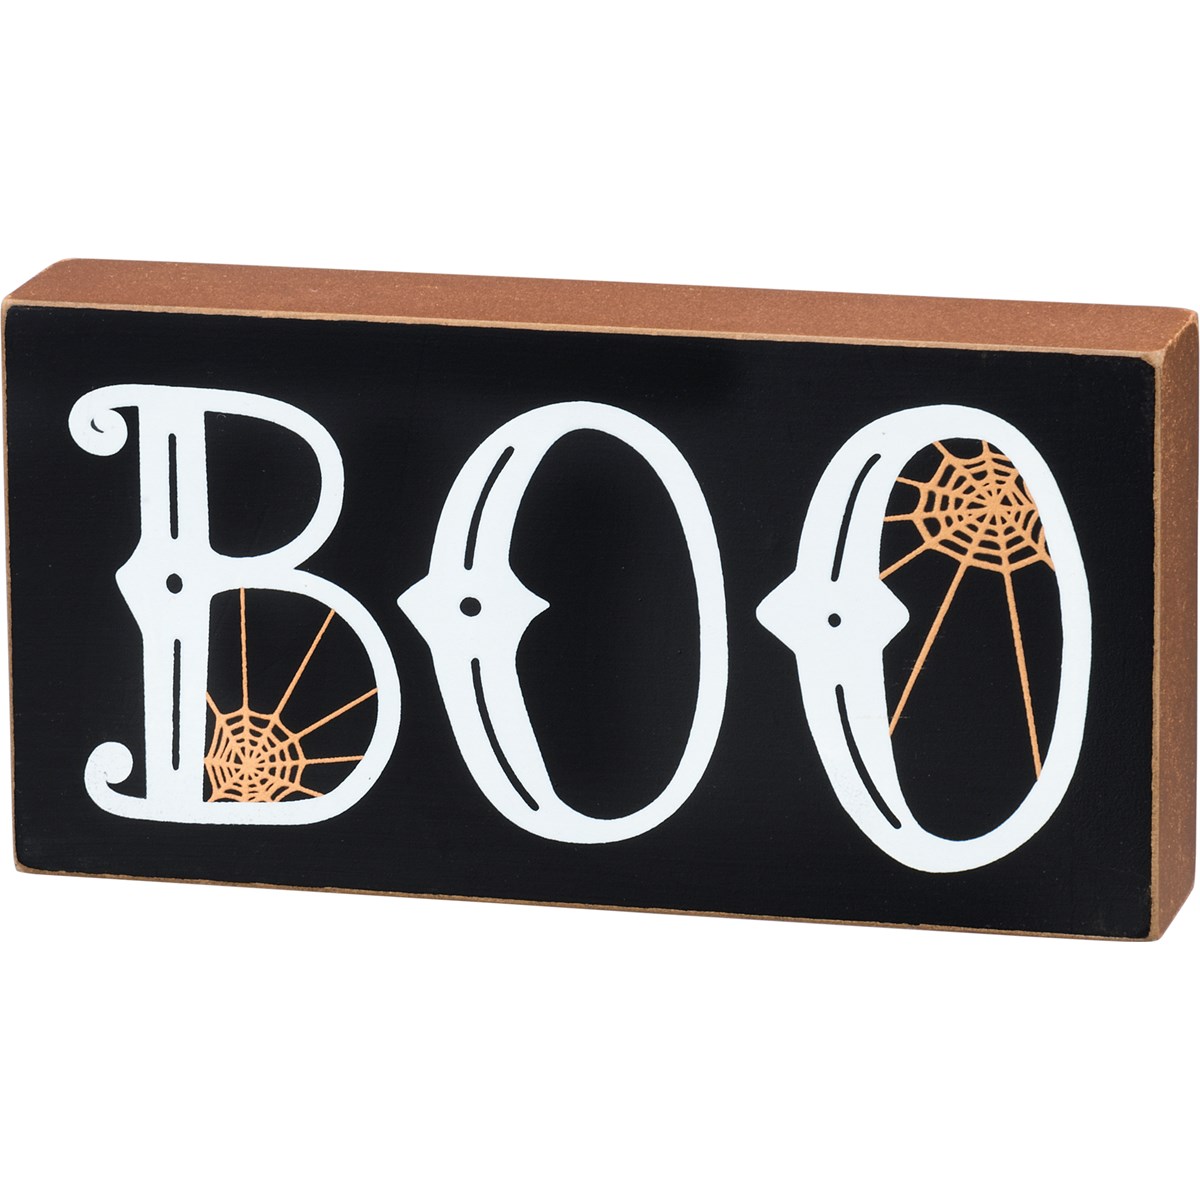 Boo Block Sign - Wood